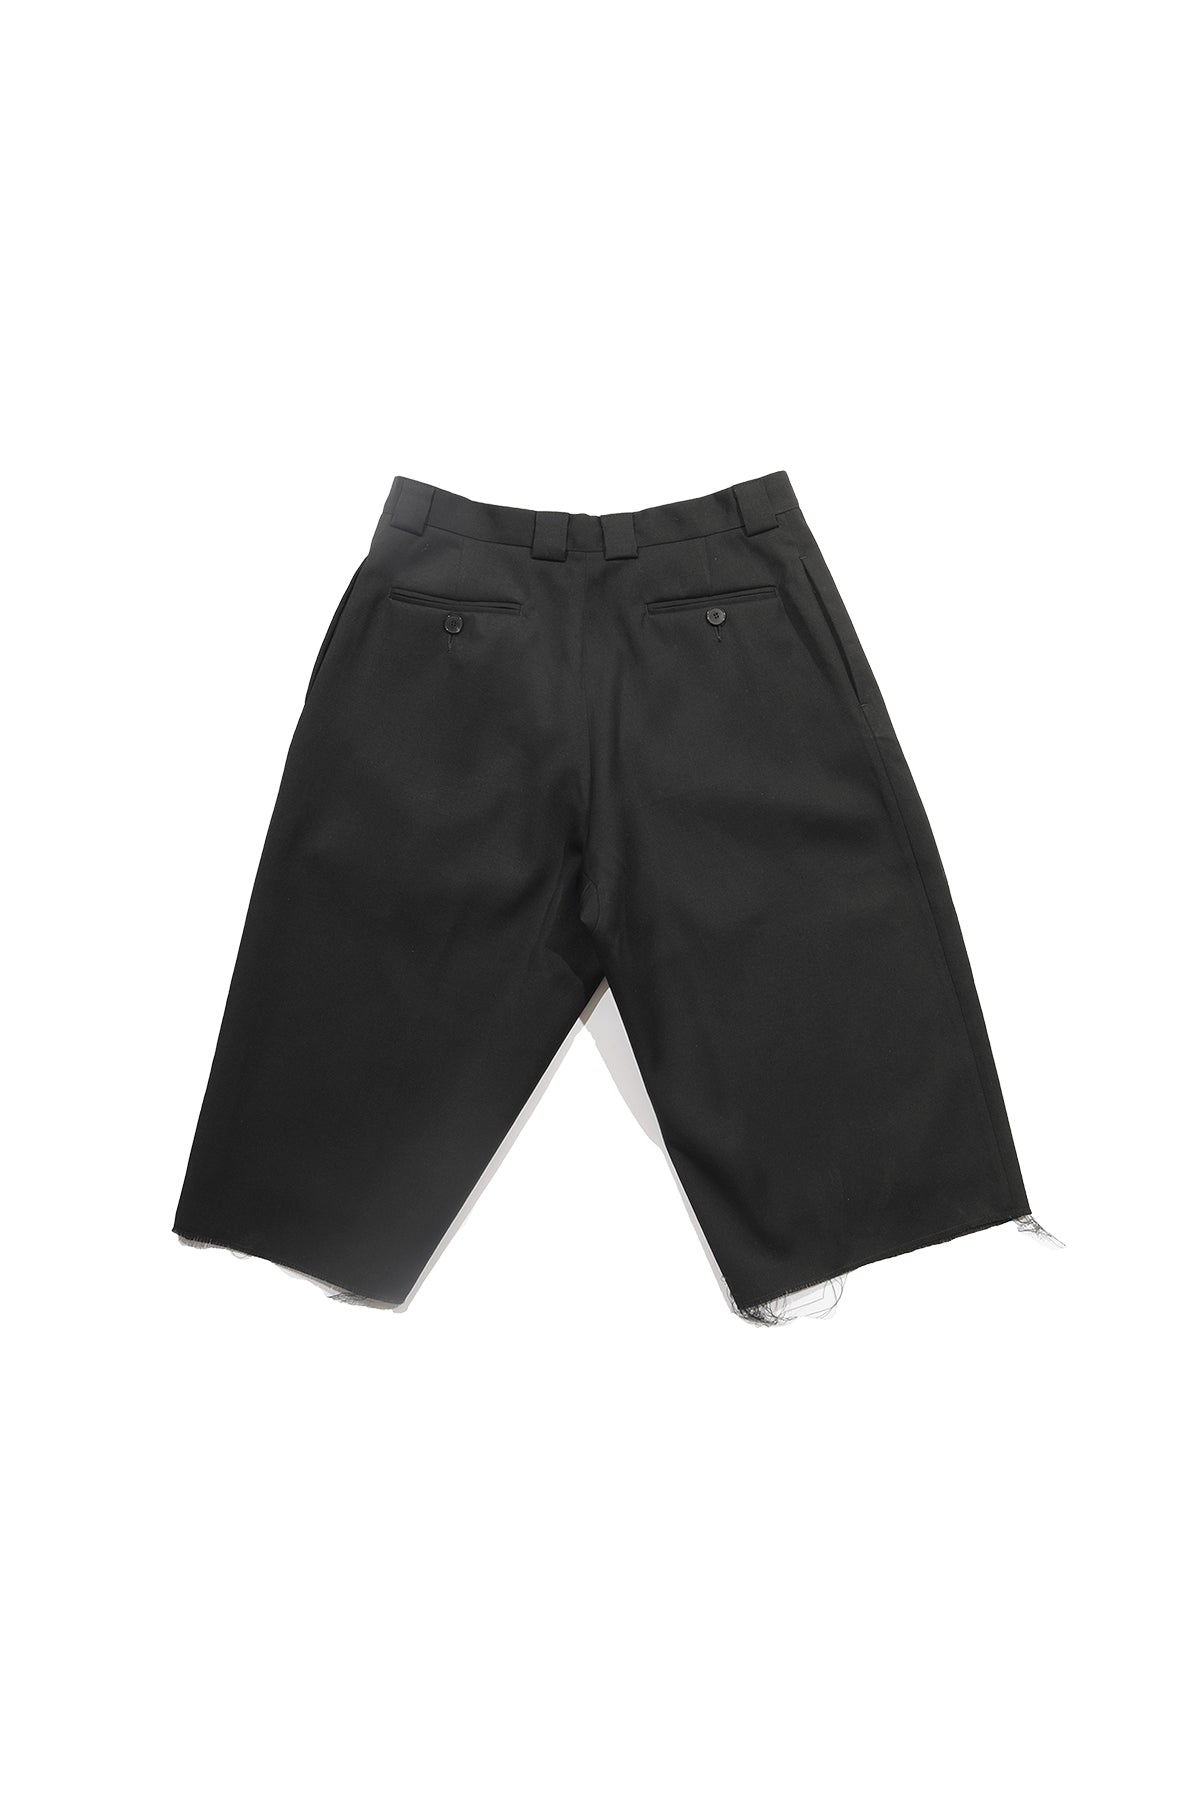 Undercover pleat-detail shorts - Black